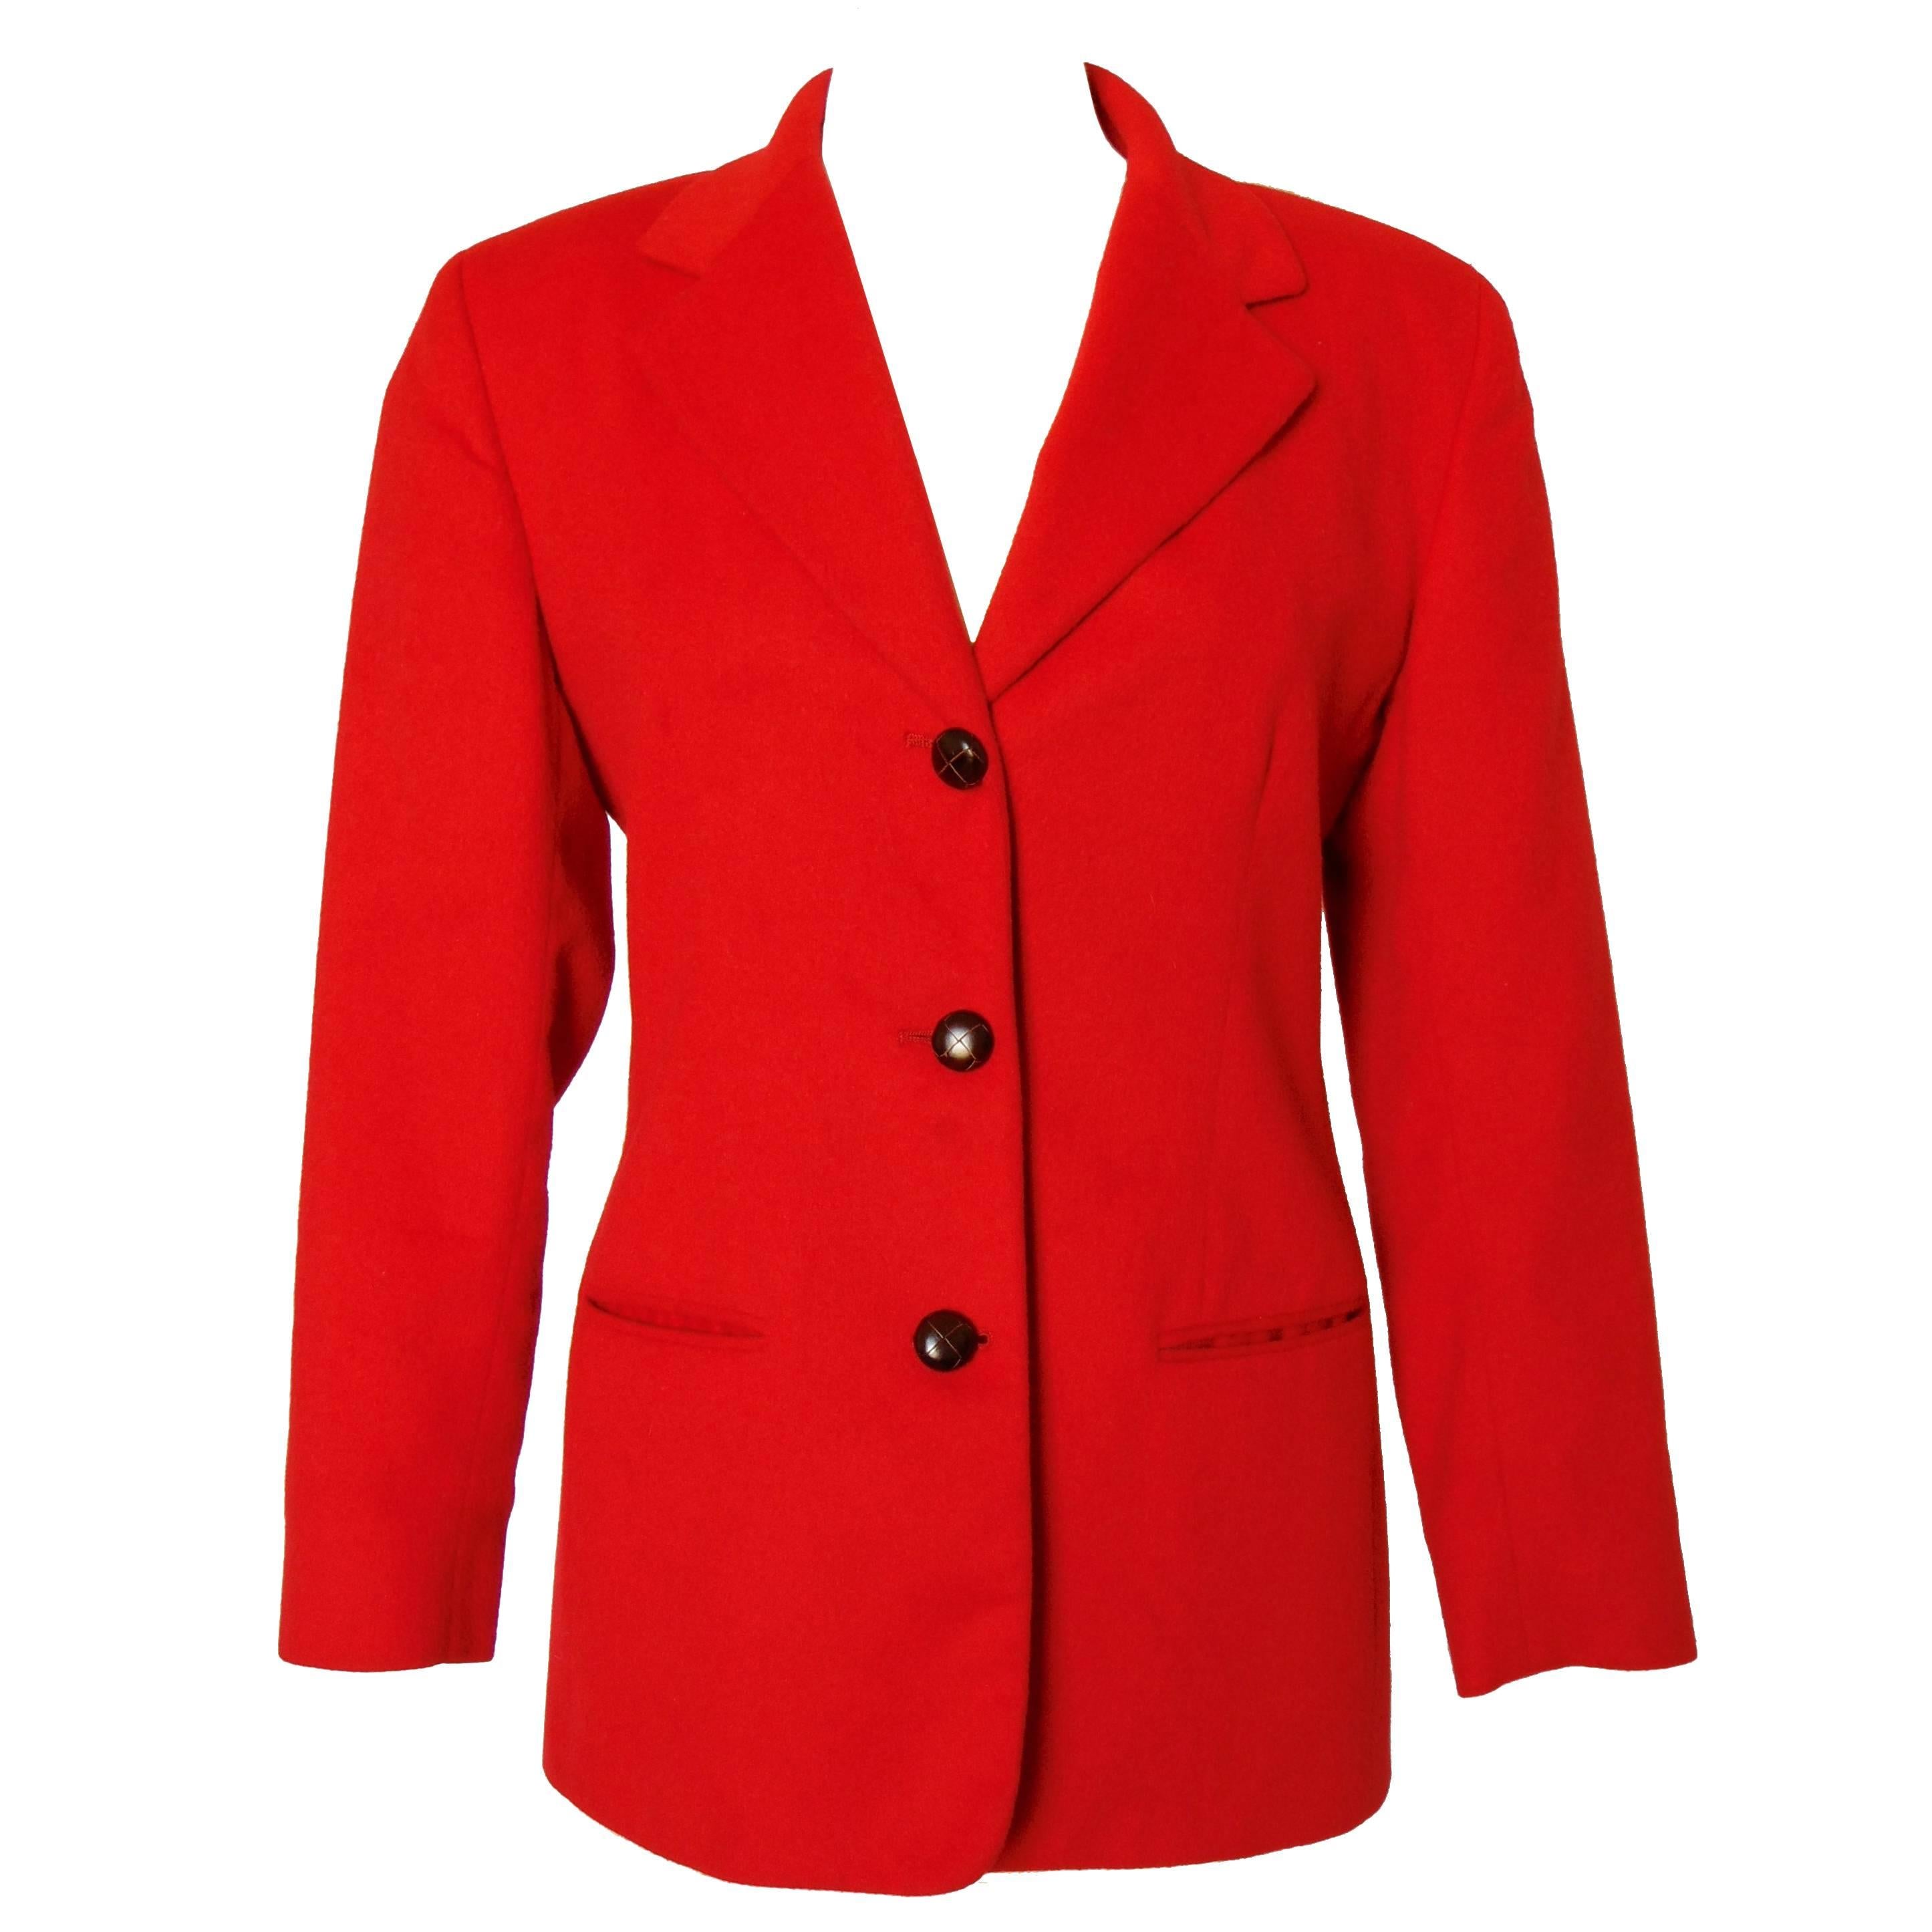 Burberrys Red Ladies Blazer Jacket Cashmere Wool Size 4 1980s